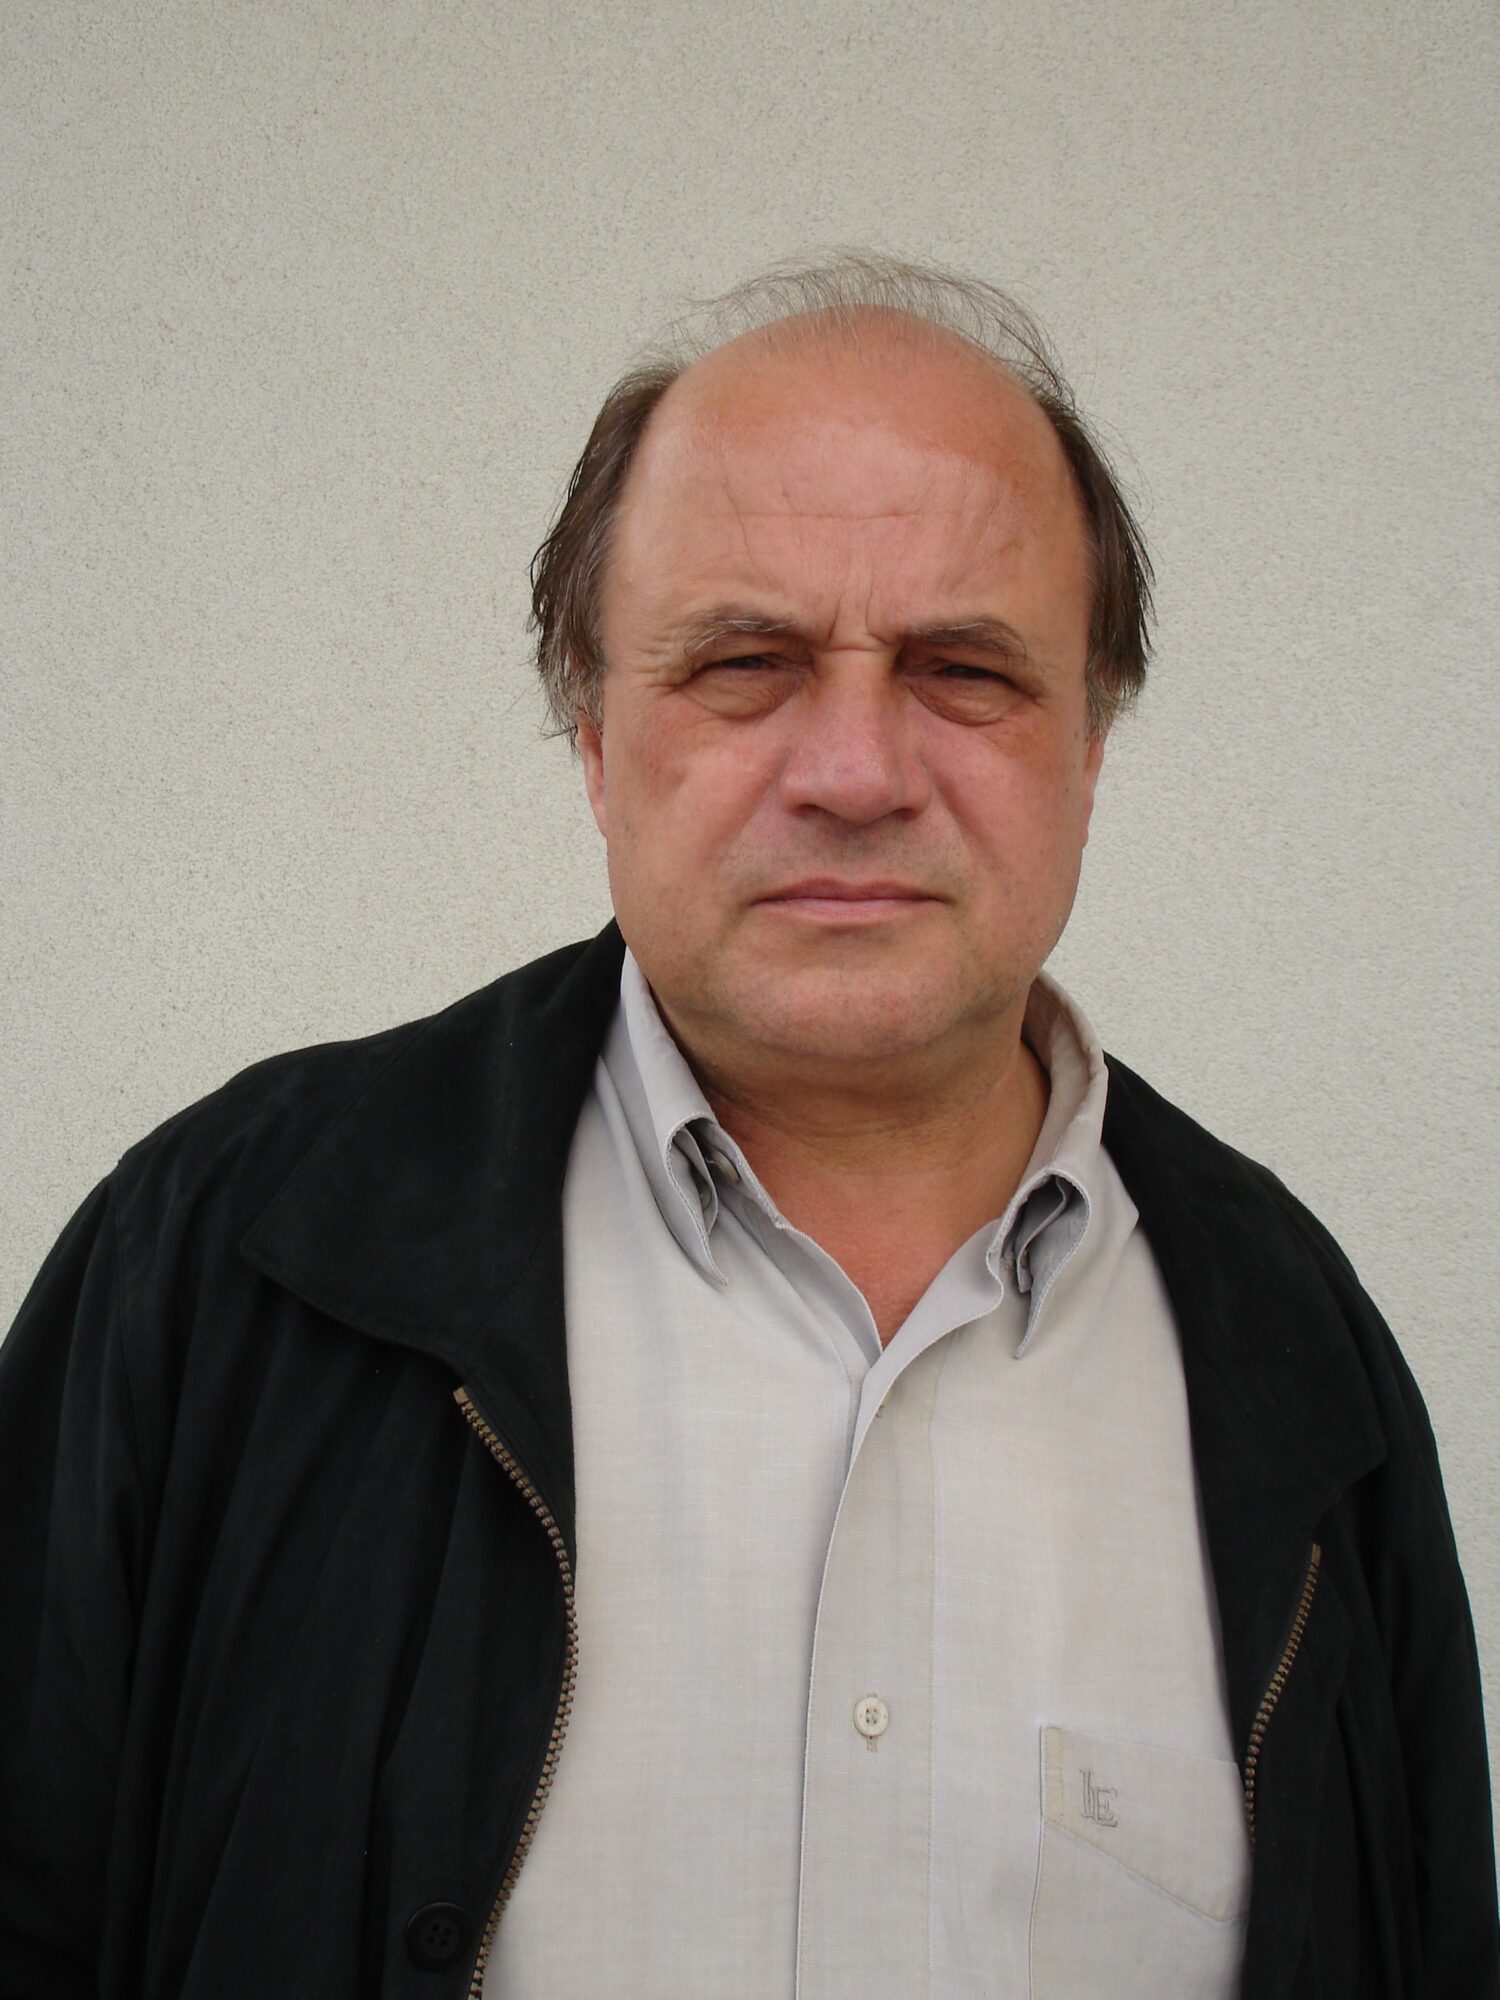 Professor Peter Koller